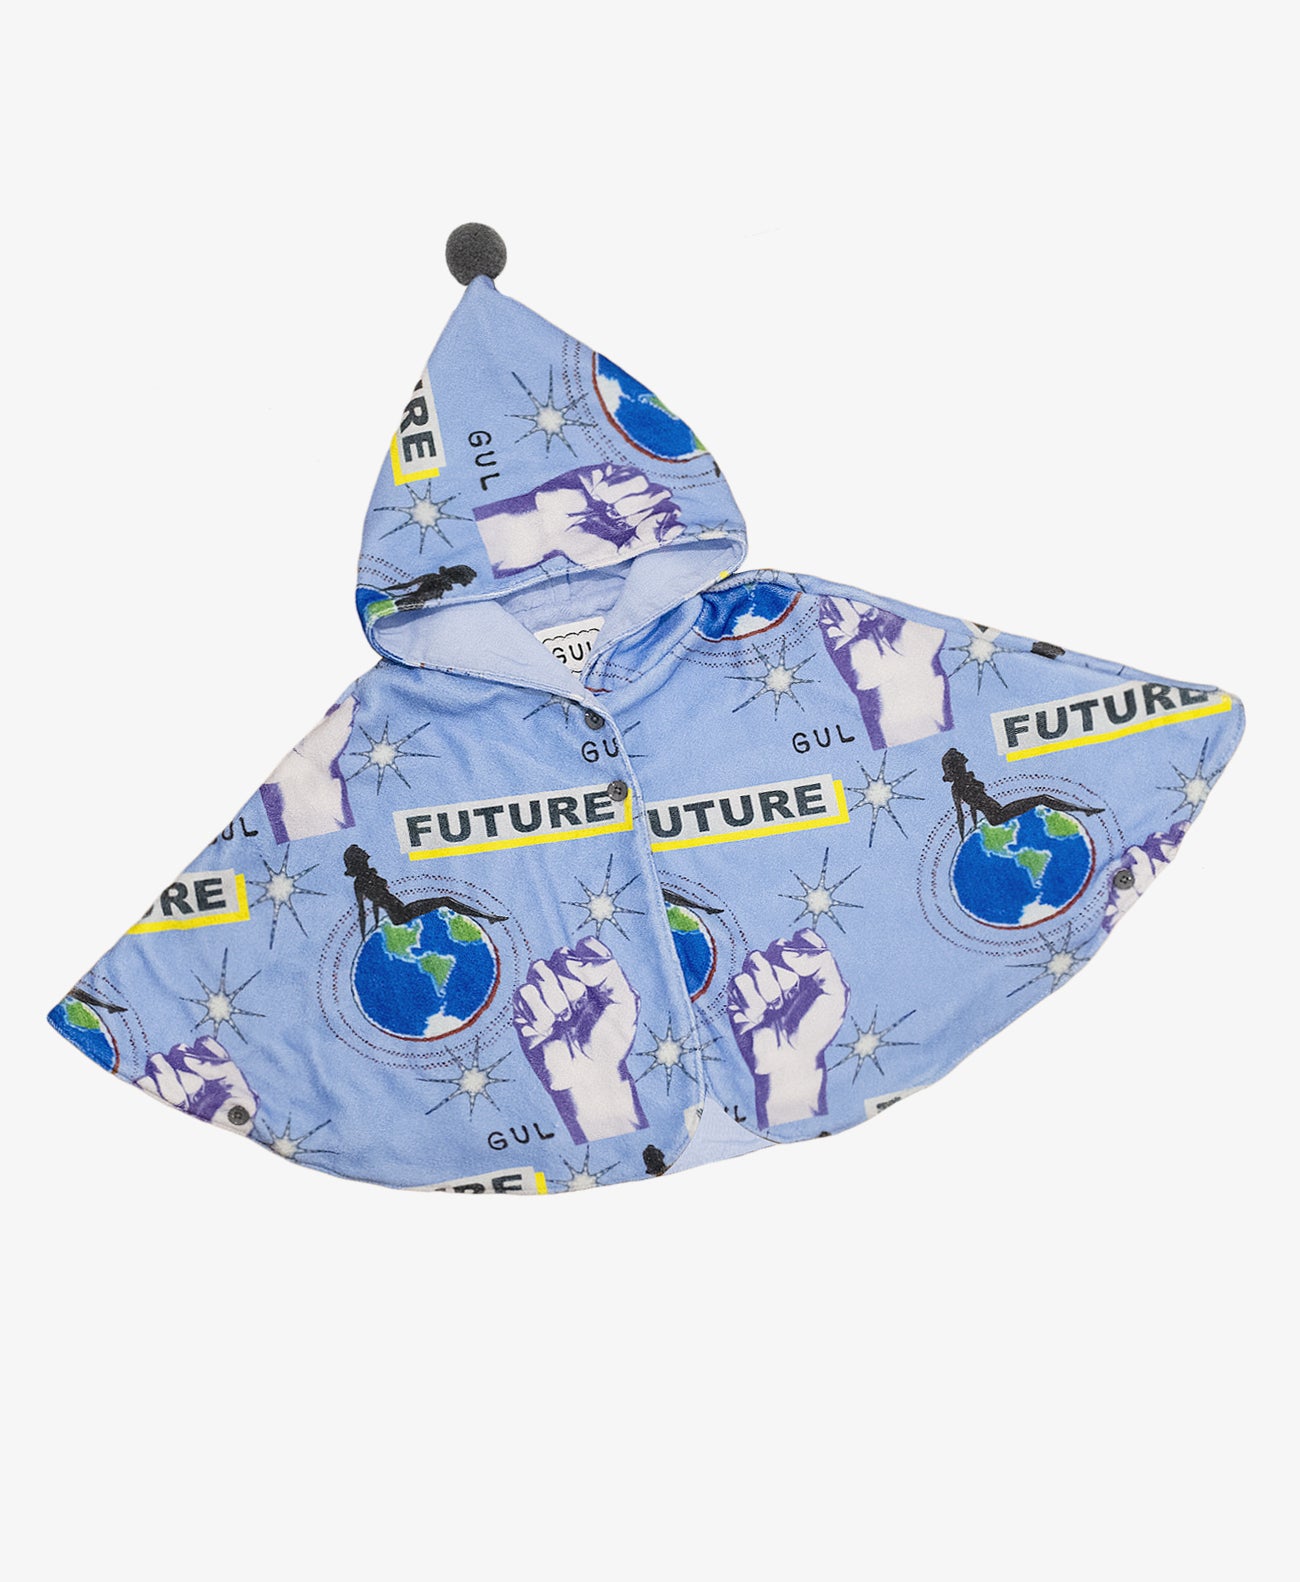 “FUTURE” Hooded Soft Blanket Poncho